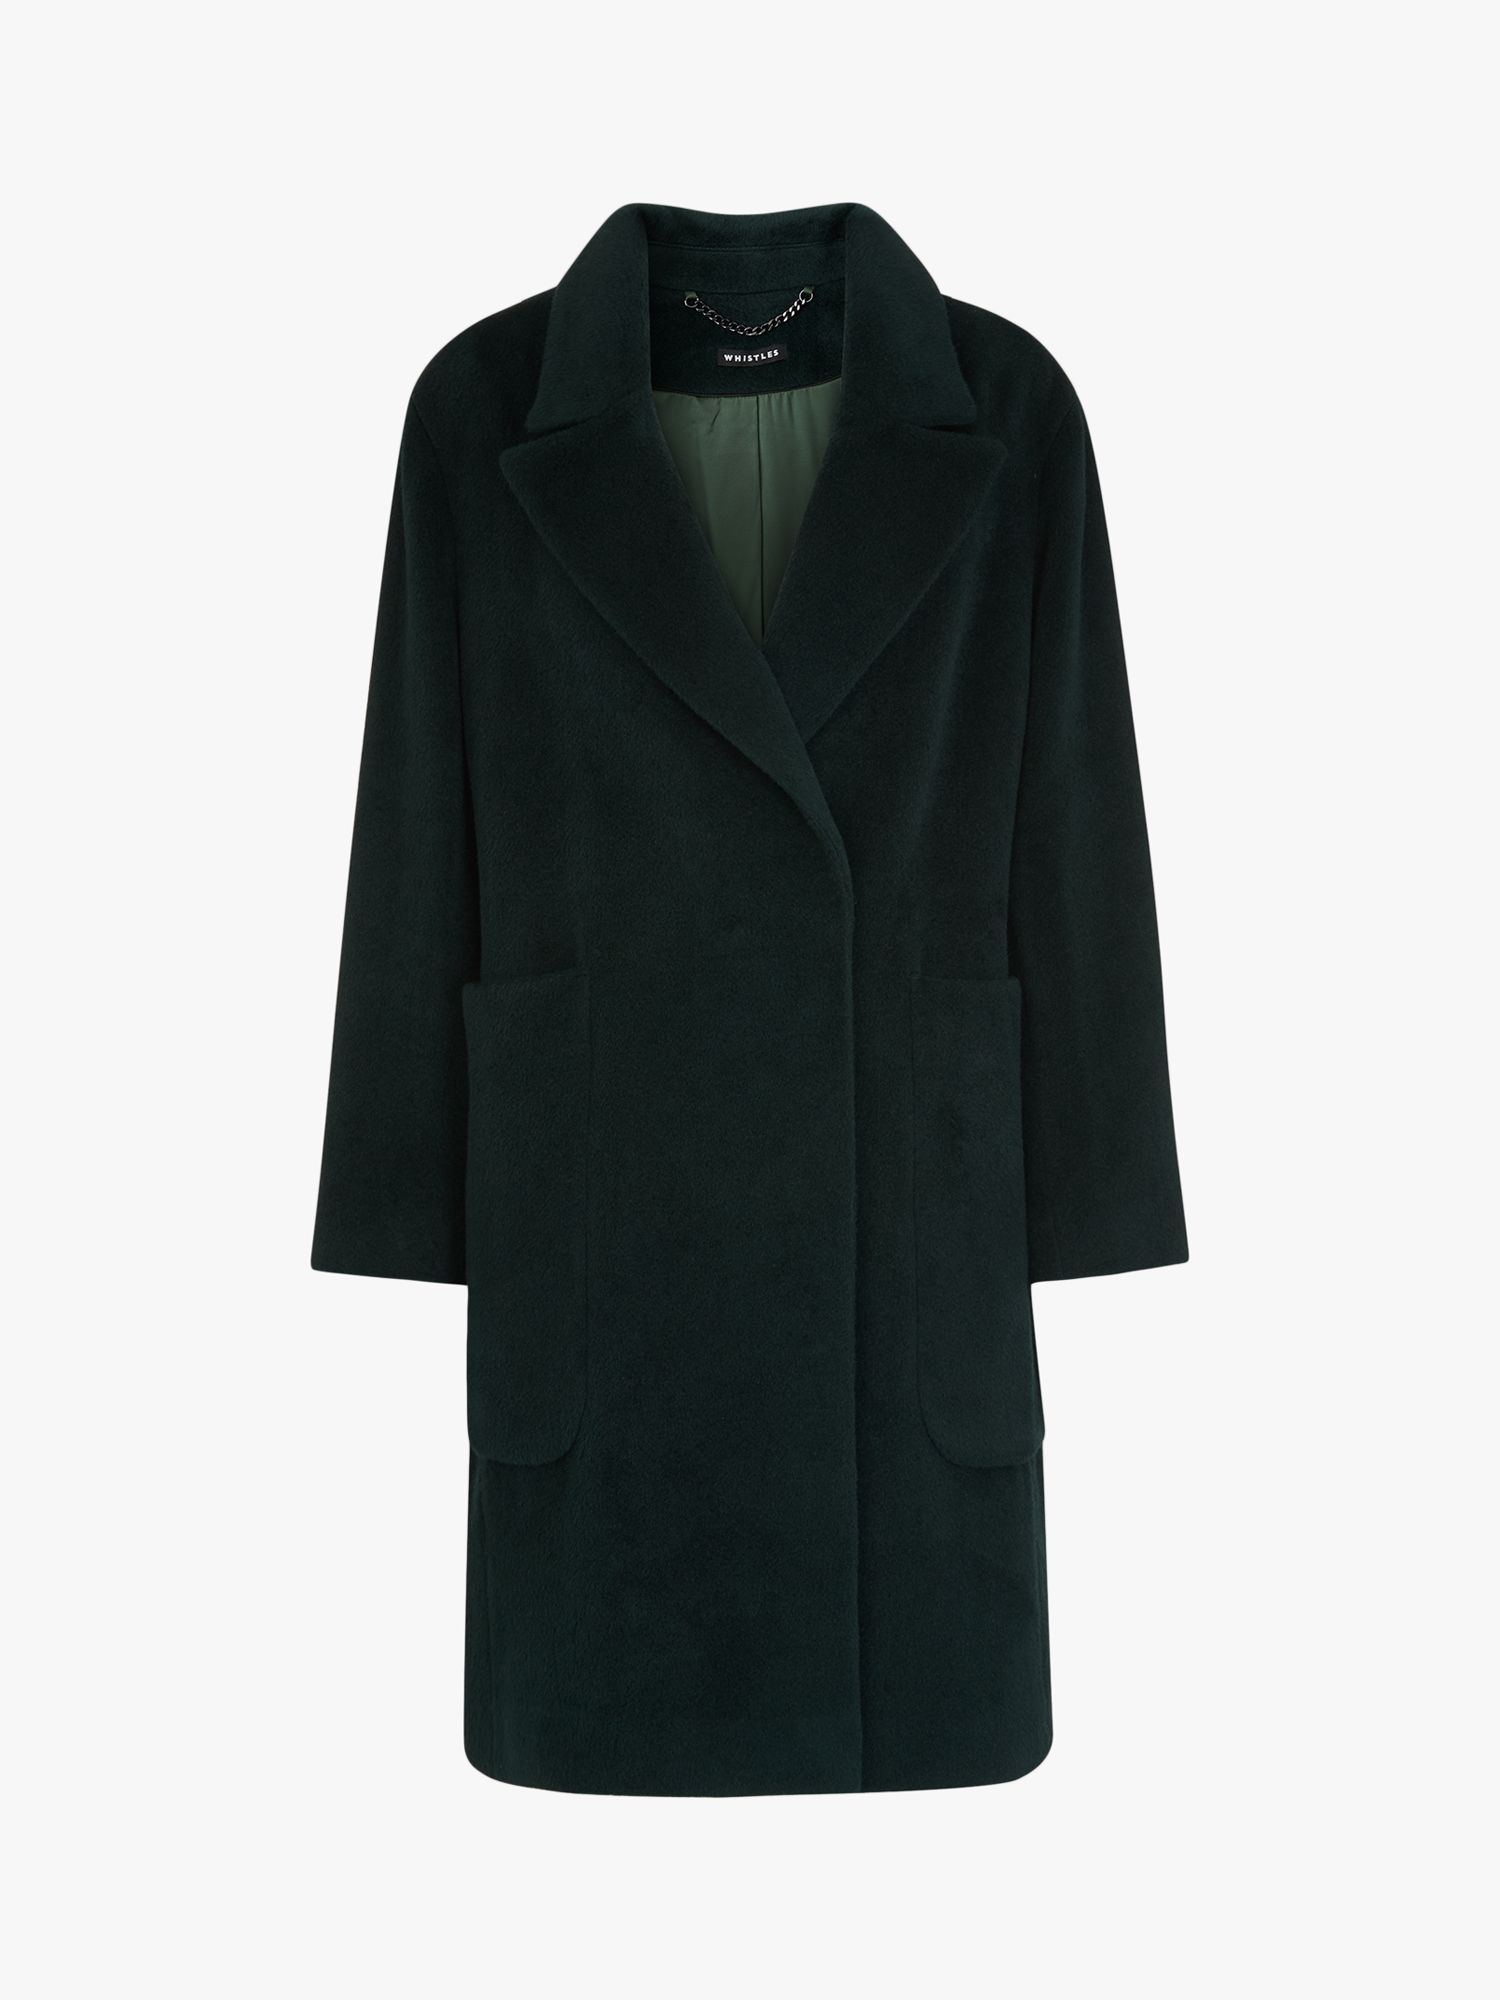 Whistles Lola Wool Blend Coat, Green at John Lewis & Partners